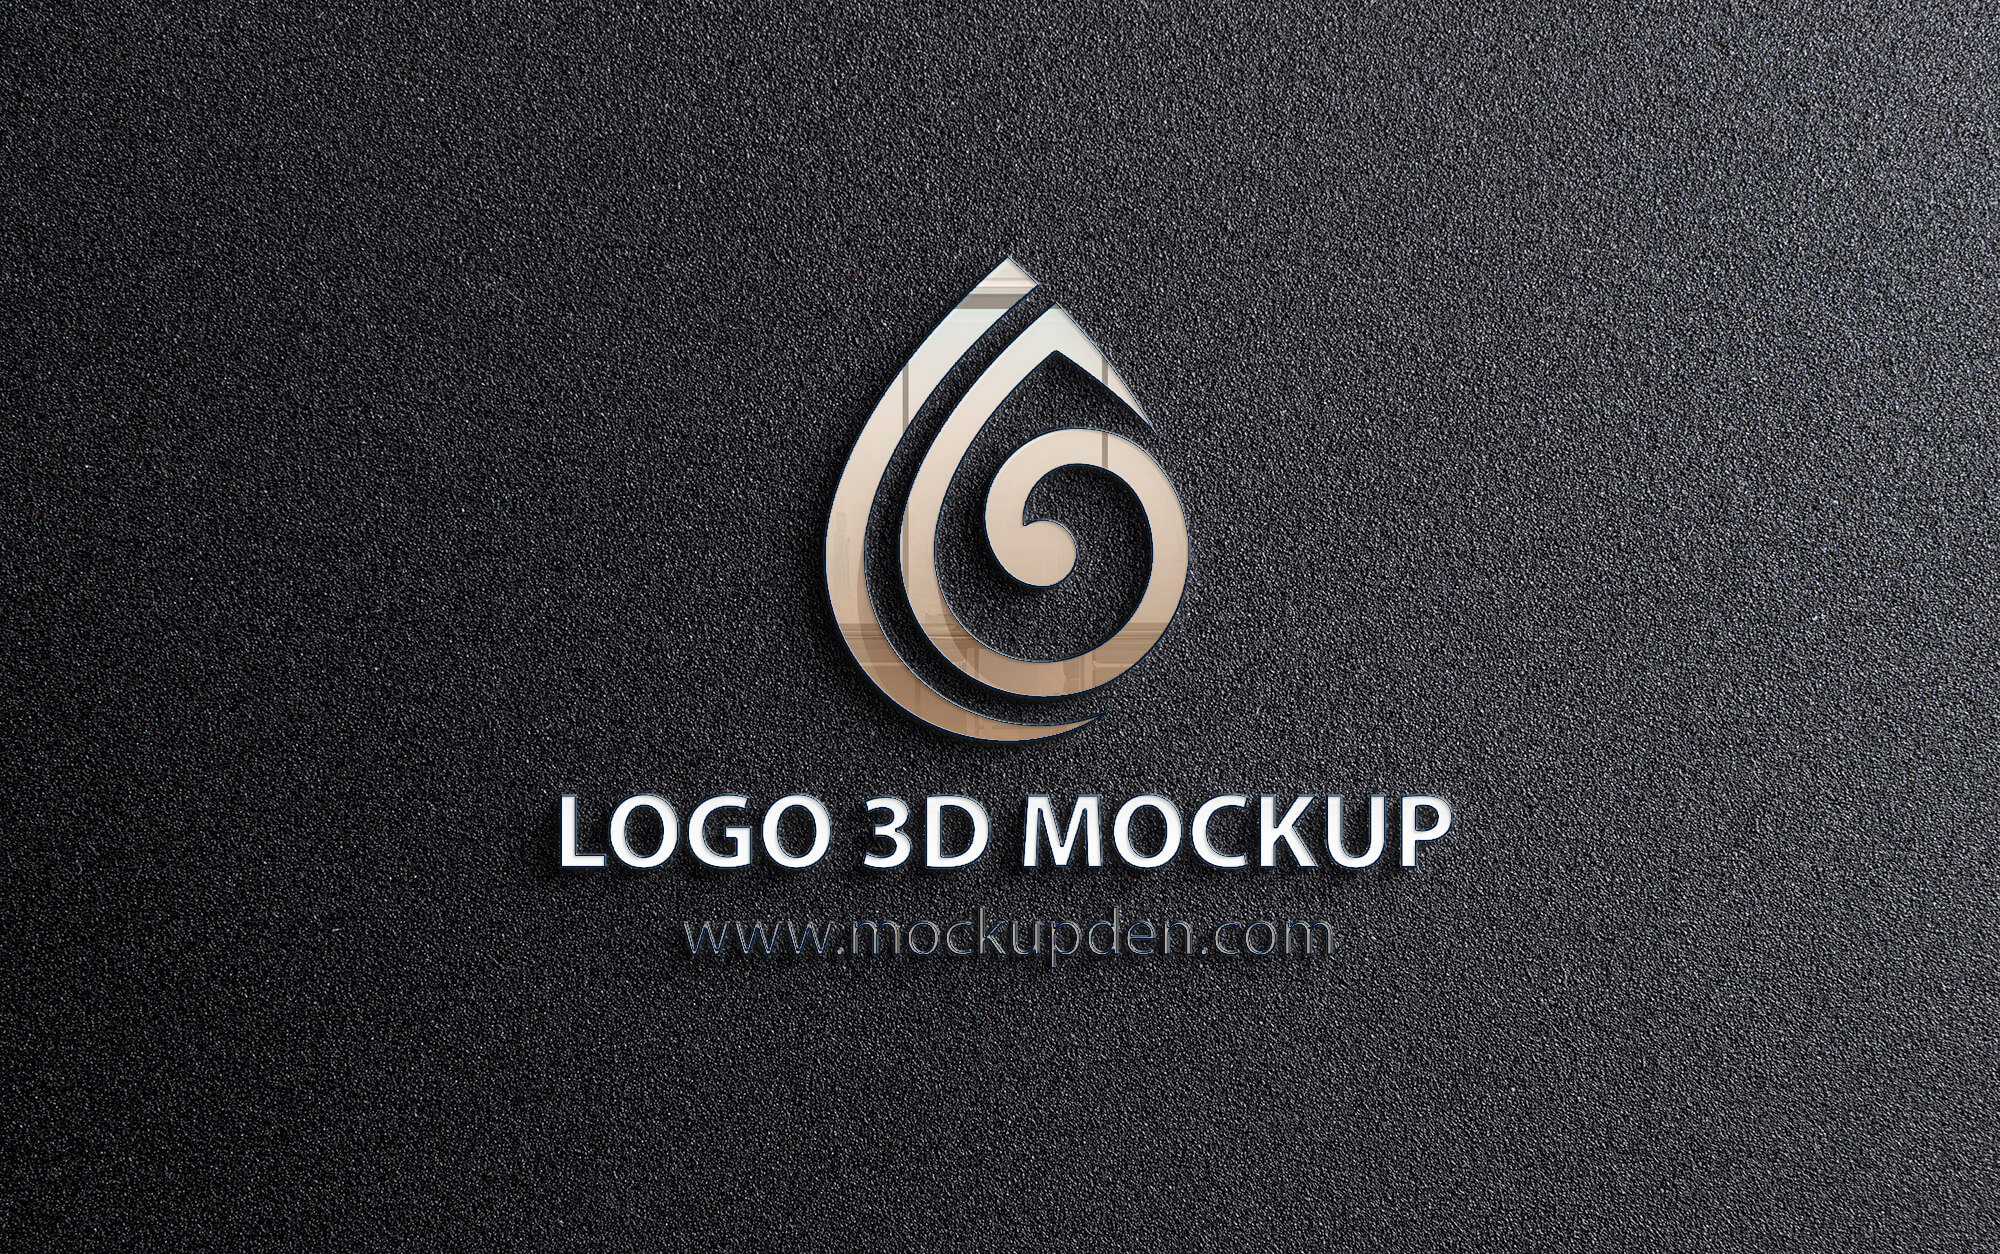 View Mockup Psd Logo Images